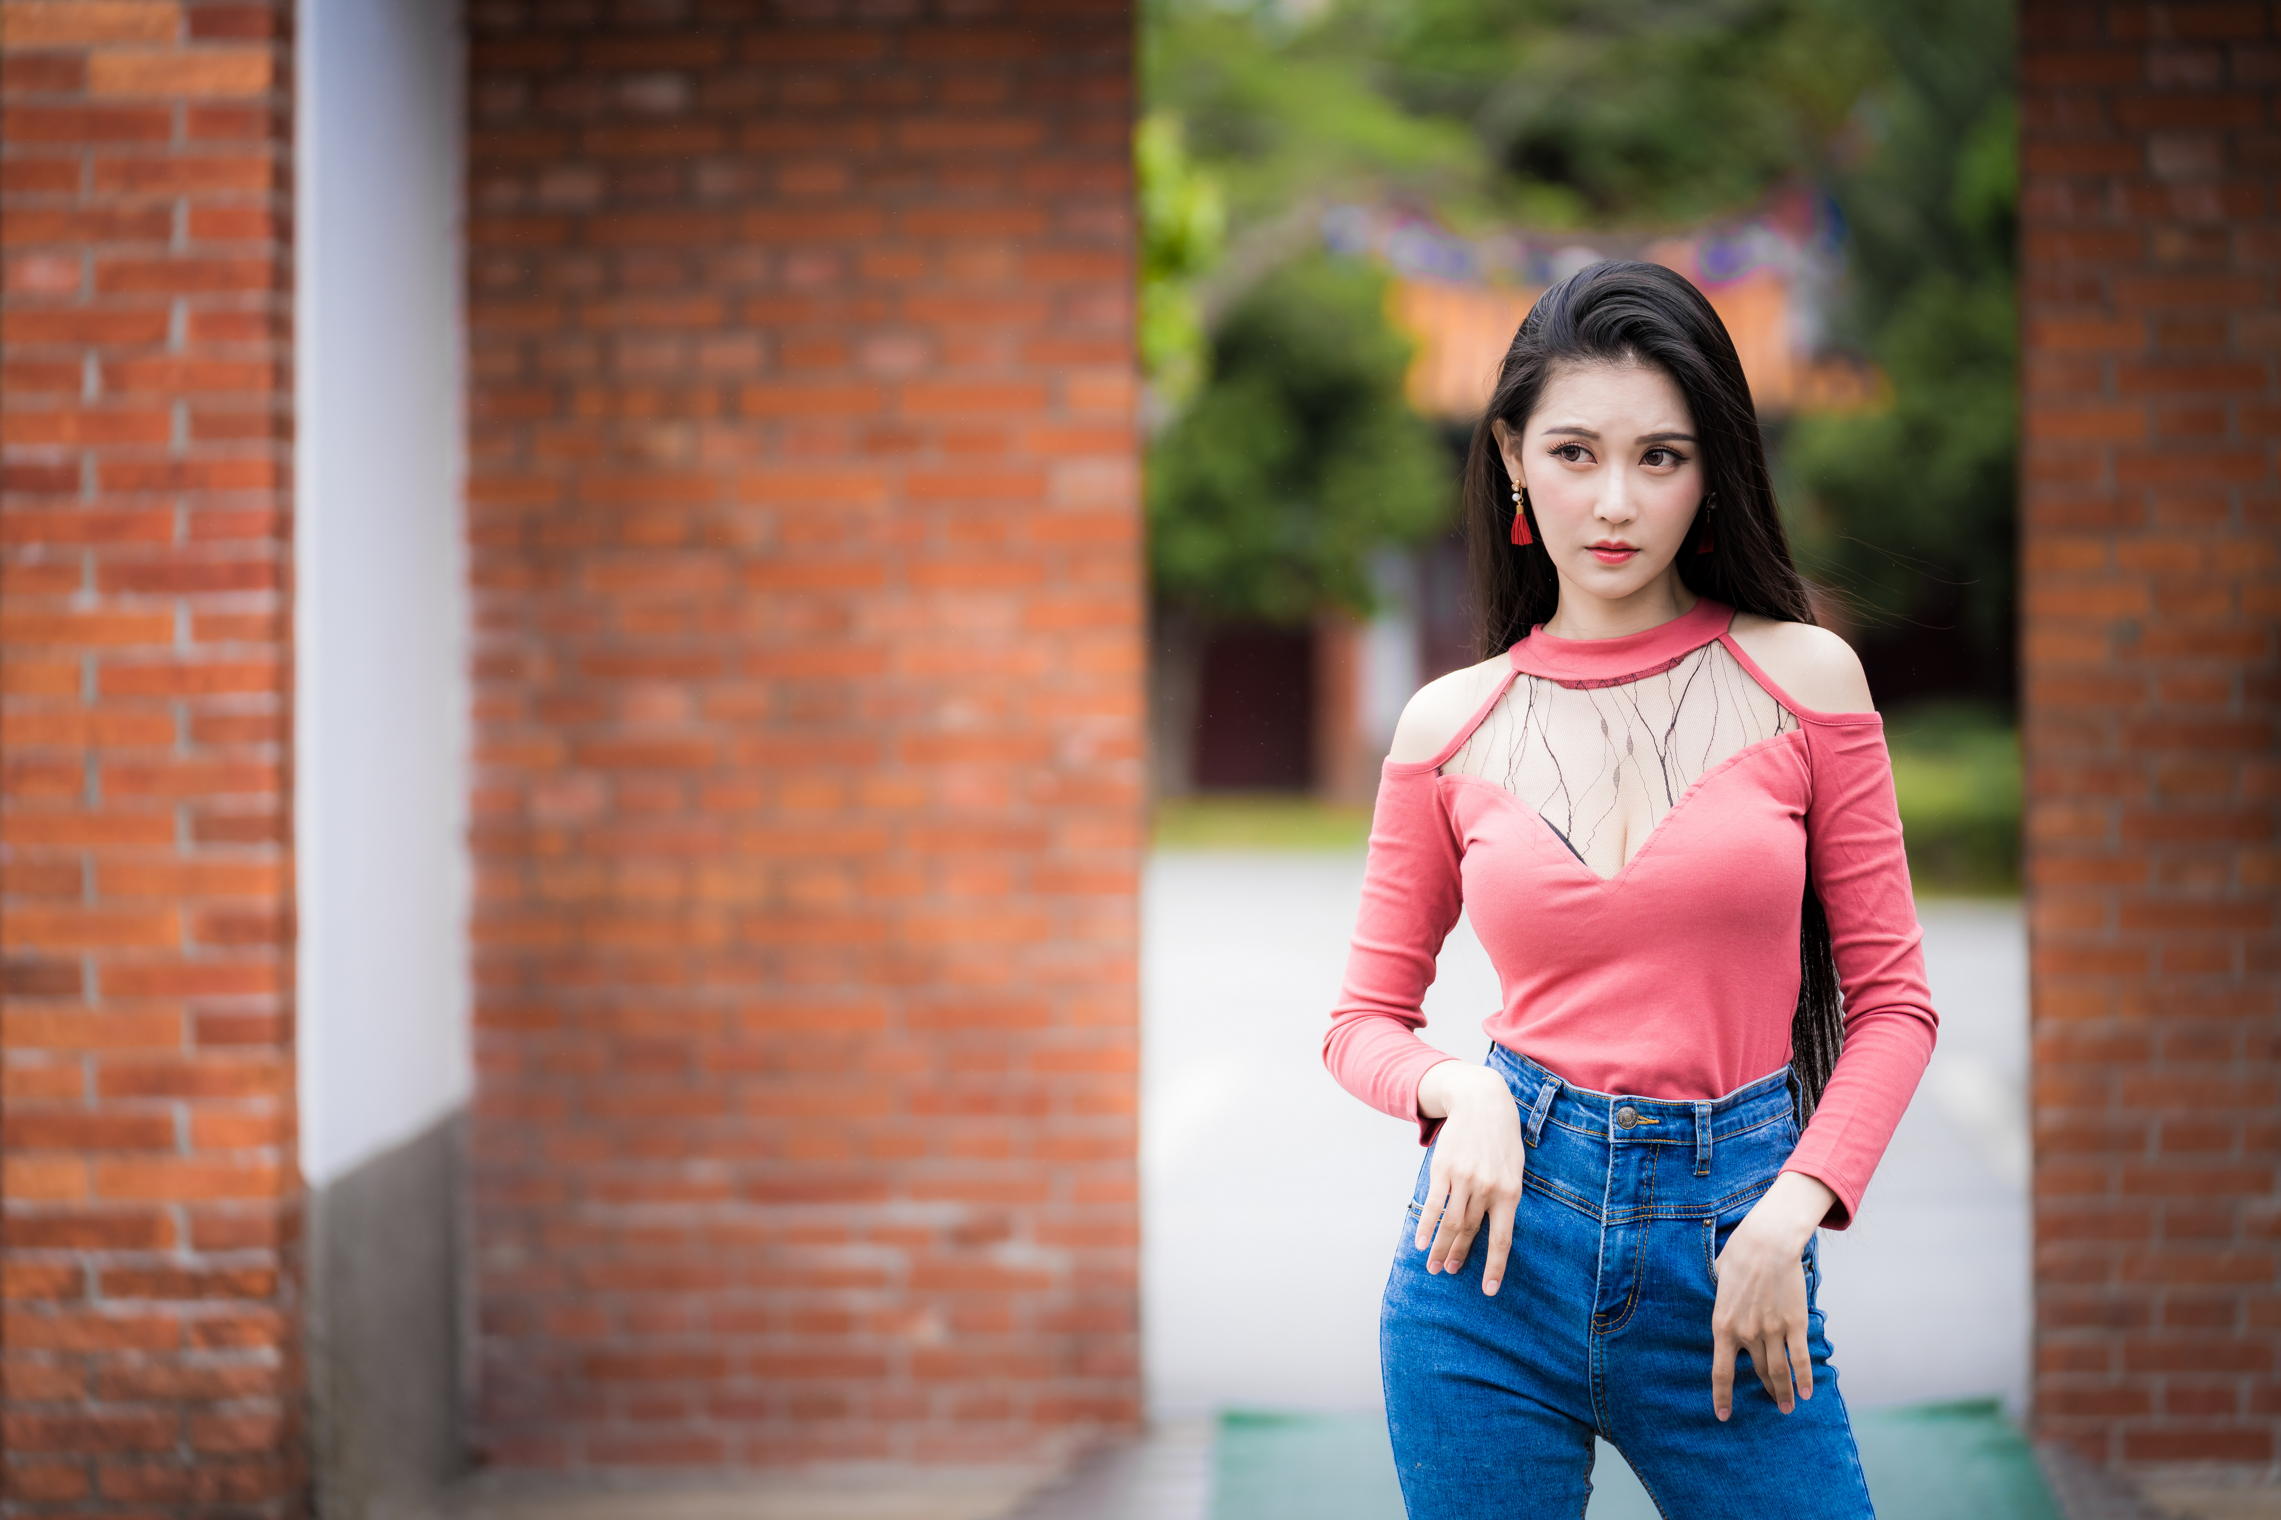 Asian Model Women Long Hair Dark Hair Jeans Red Shirt Bricks Wall Depth Of Field Trees Earring 2281x1520